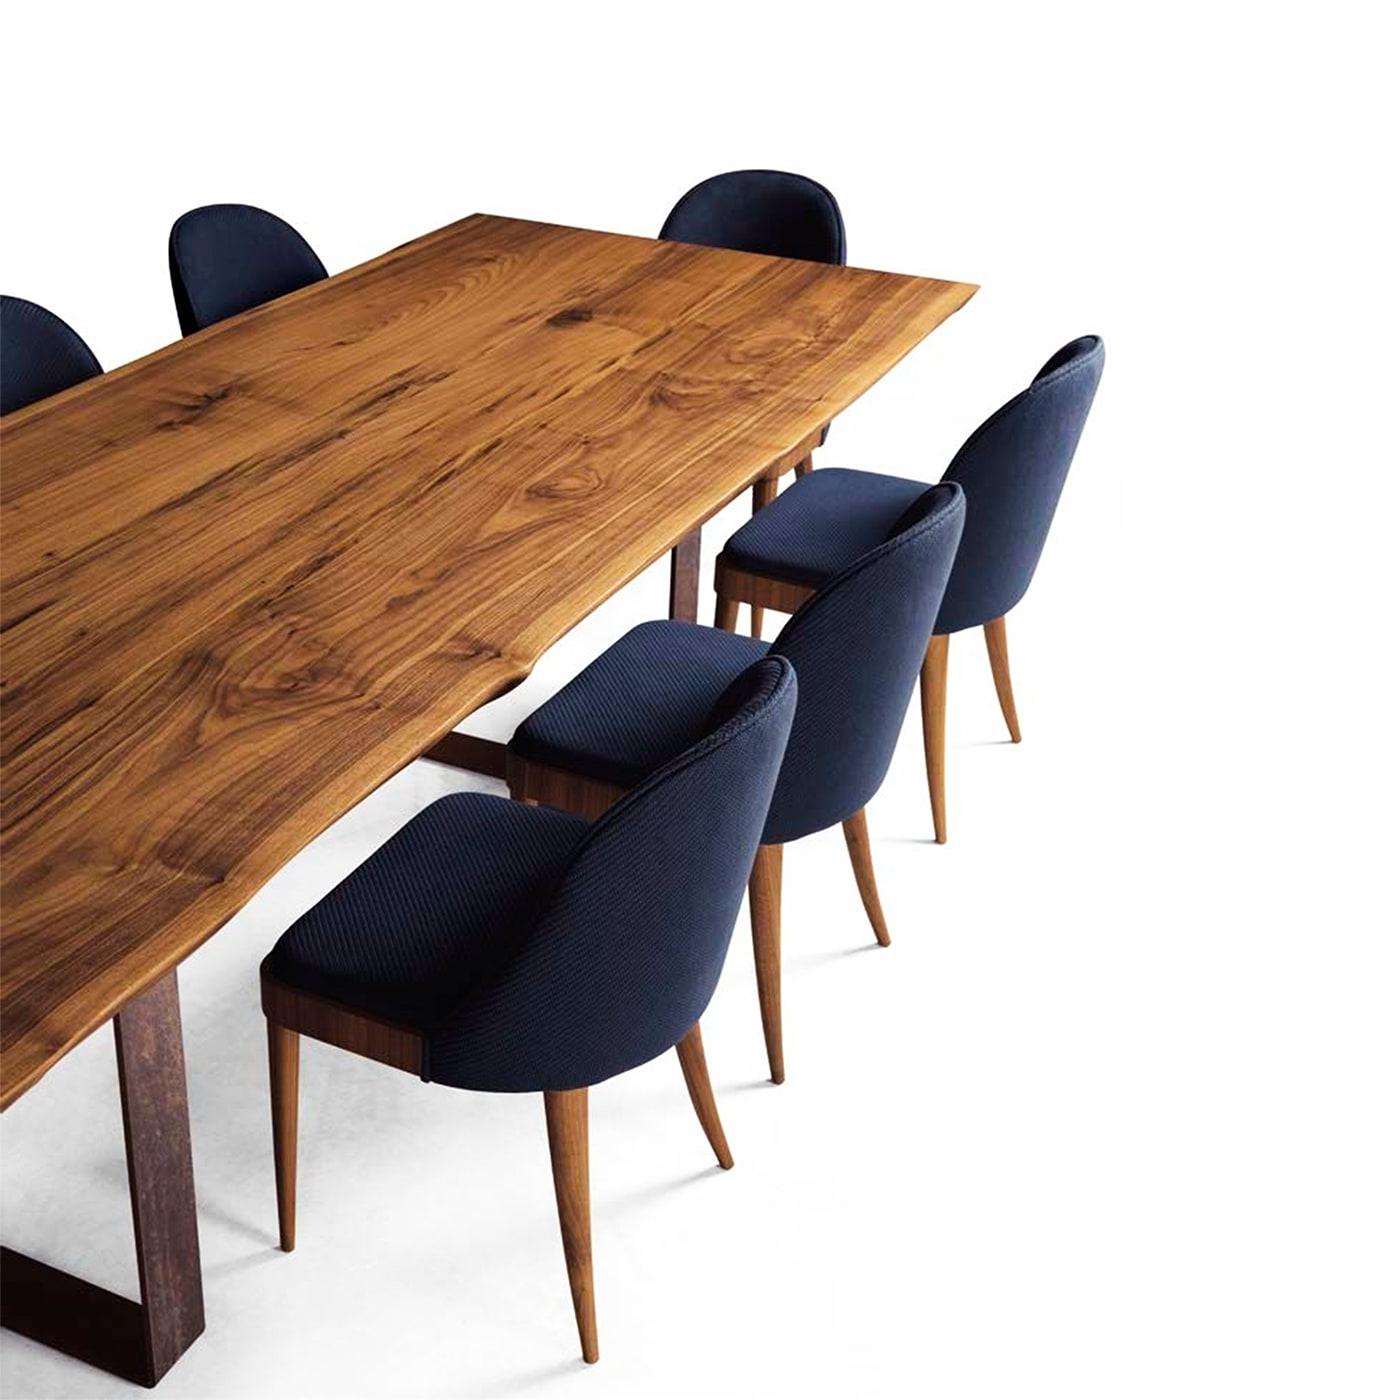 Misura Luxury Dining Table ☞ Dimensions: Length 300 cm